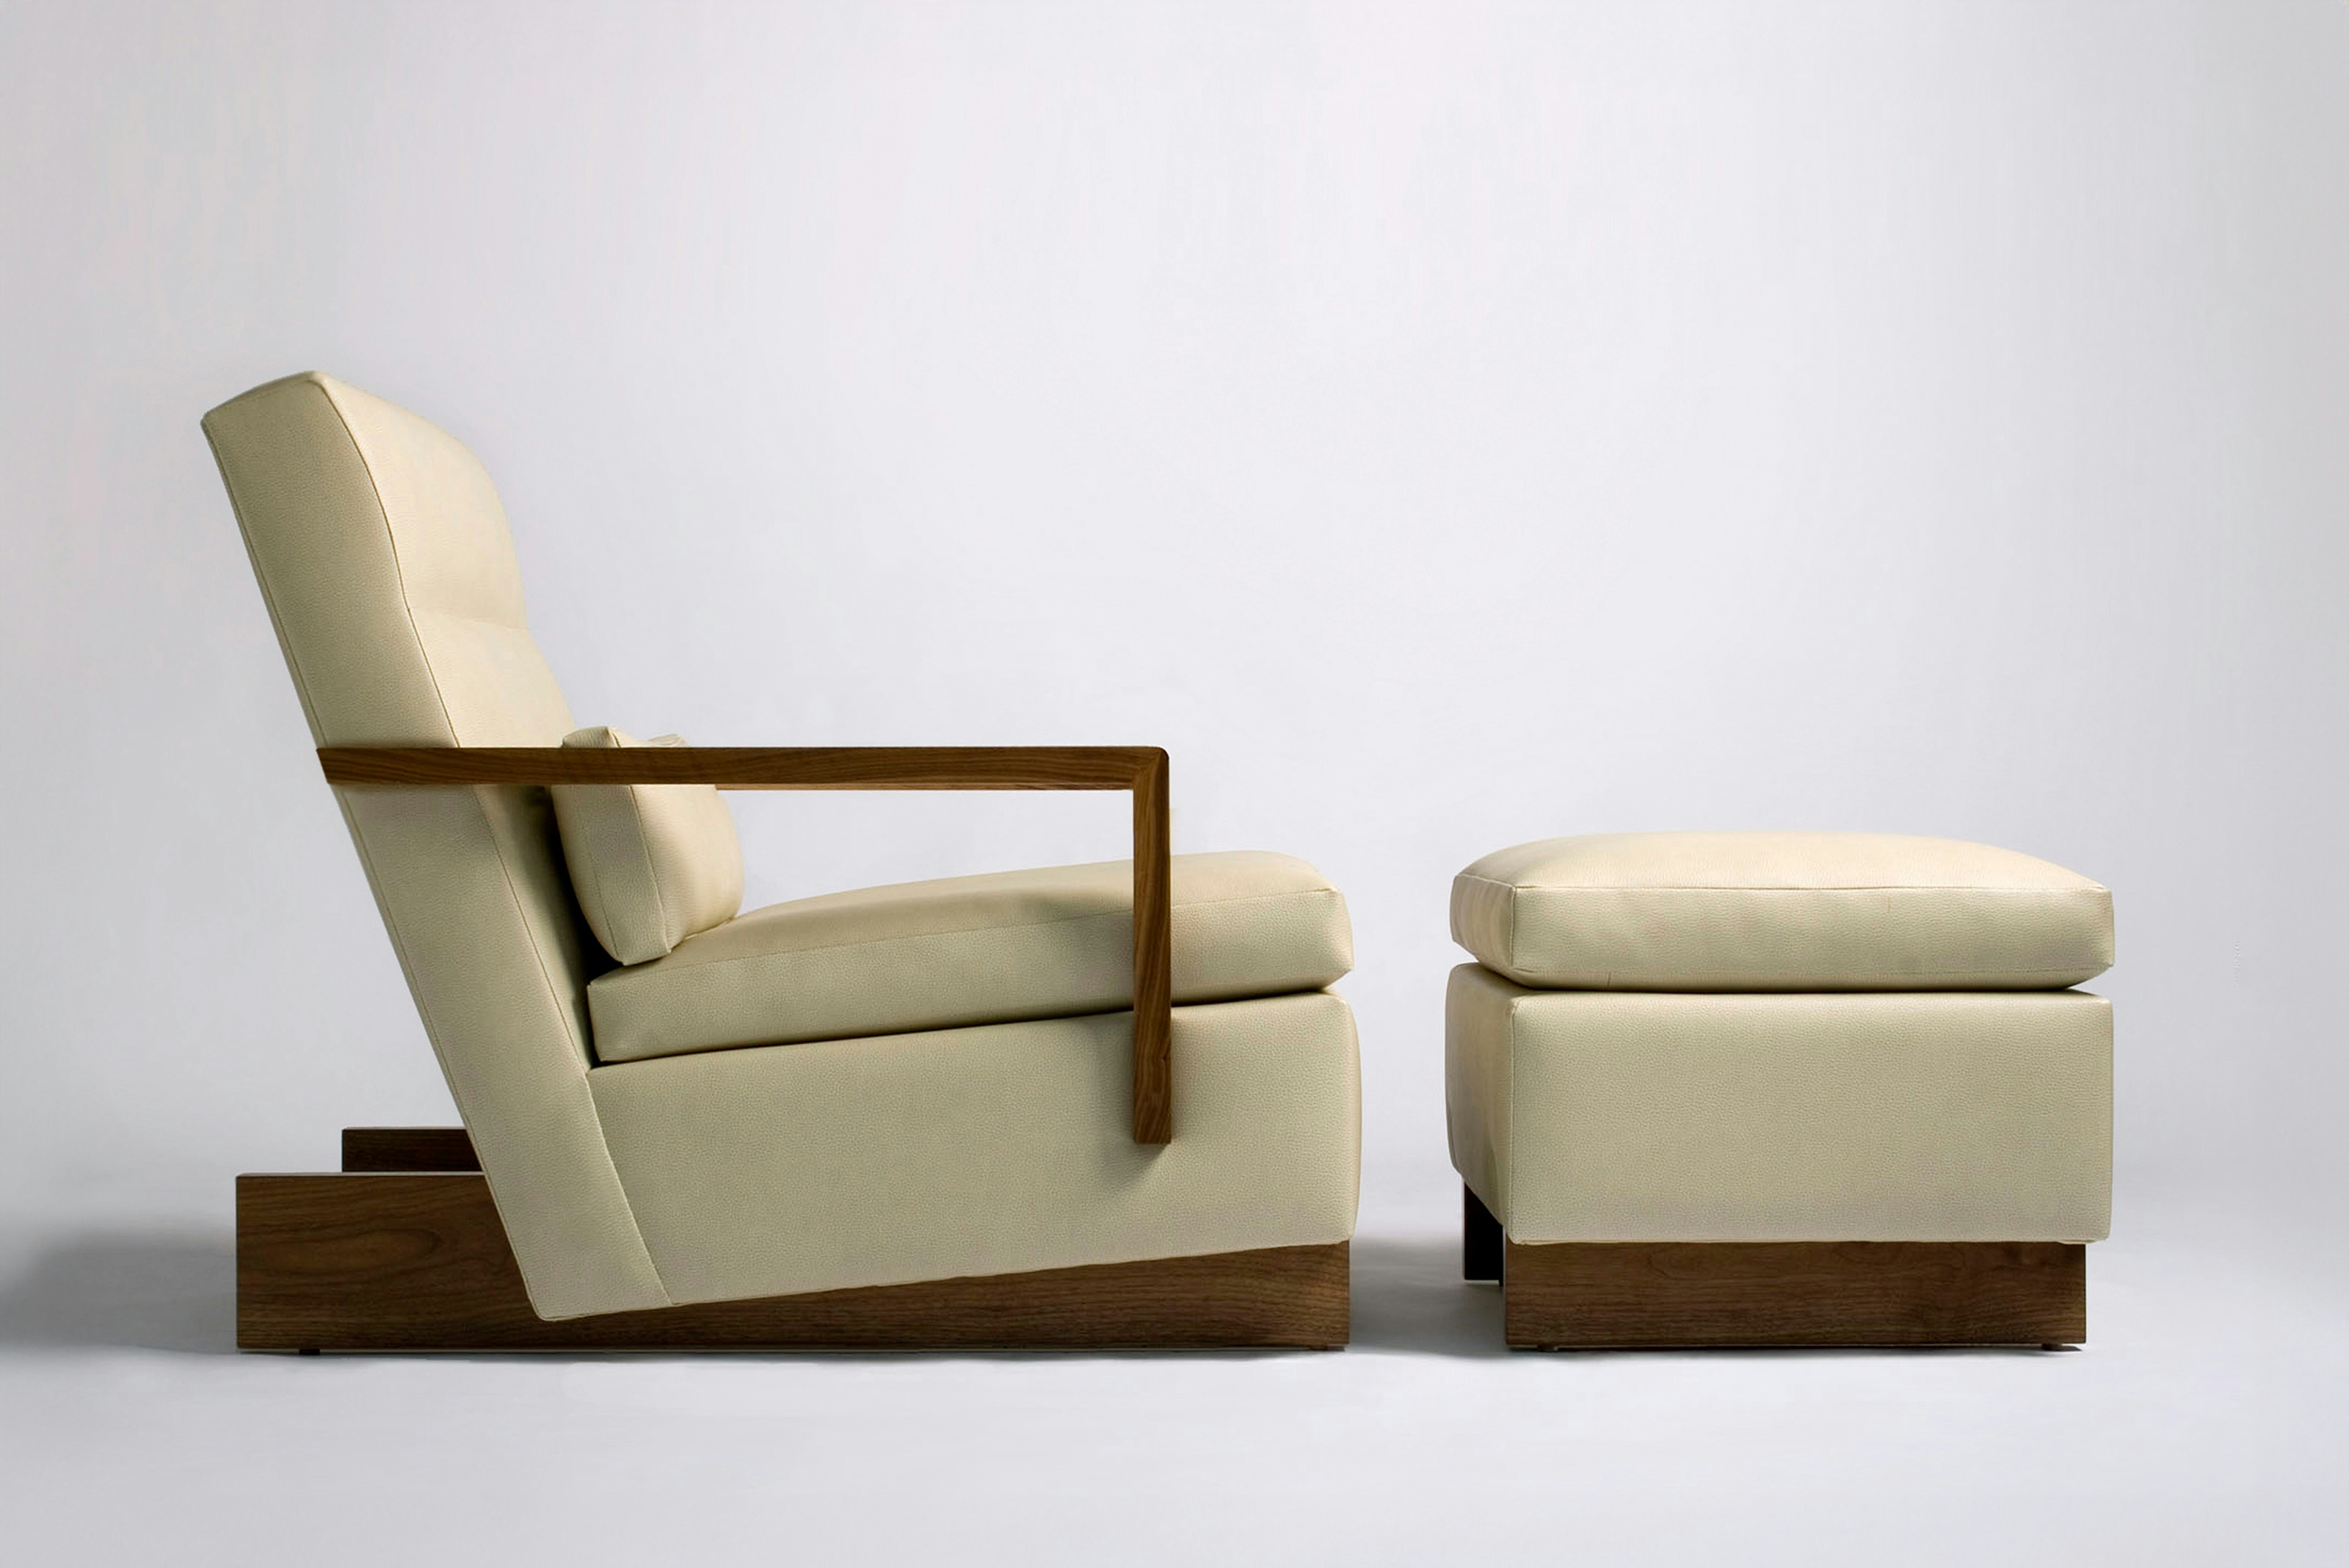 Phase Design Trax Lounge Chair 1 Alt Web